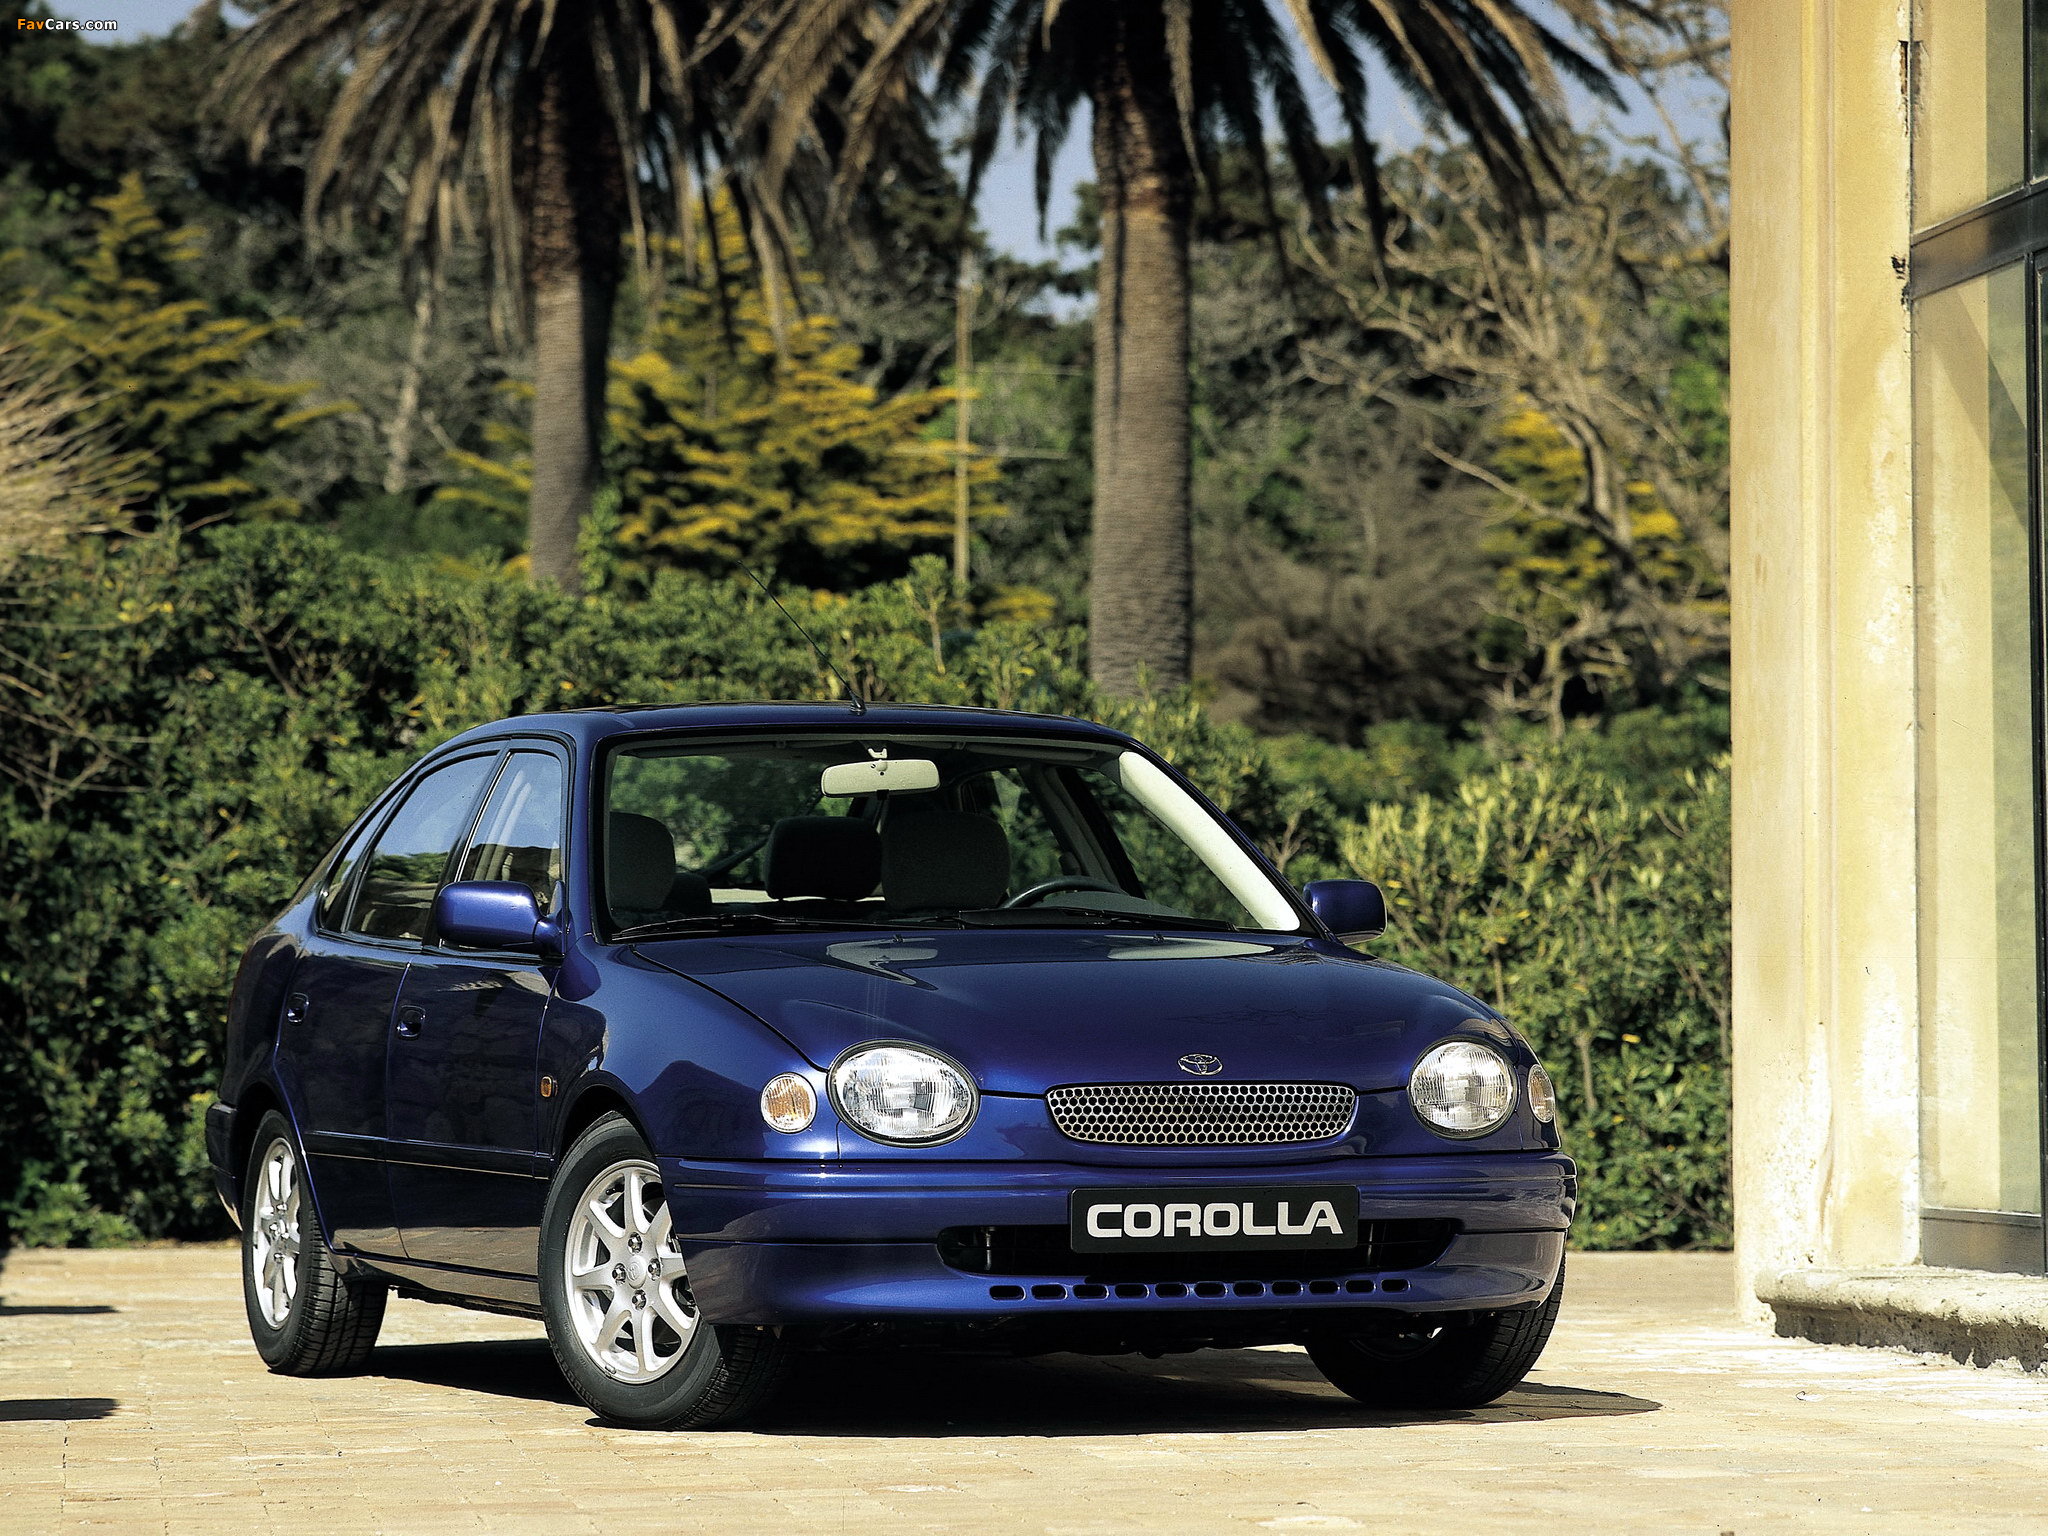 Toyota Corolla 5-door 1997-99 photos (2048x1536)